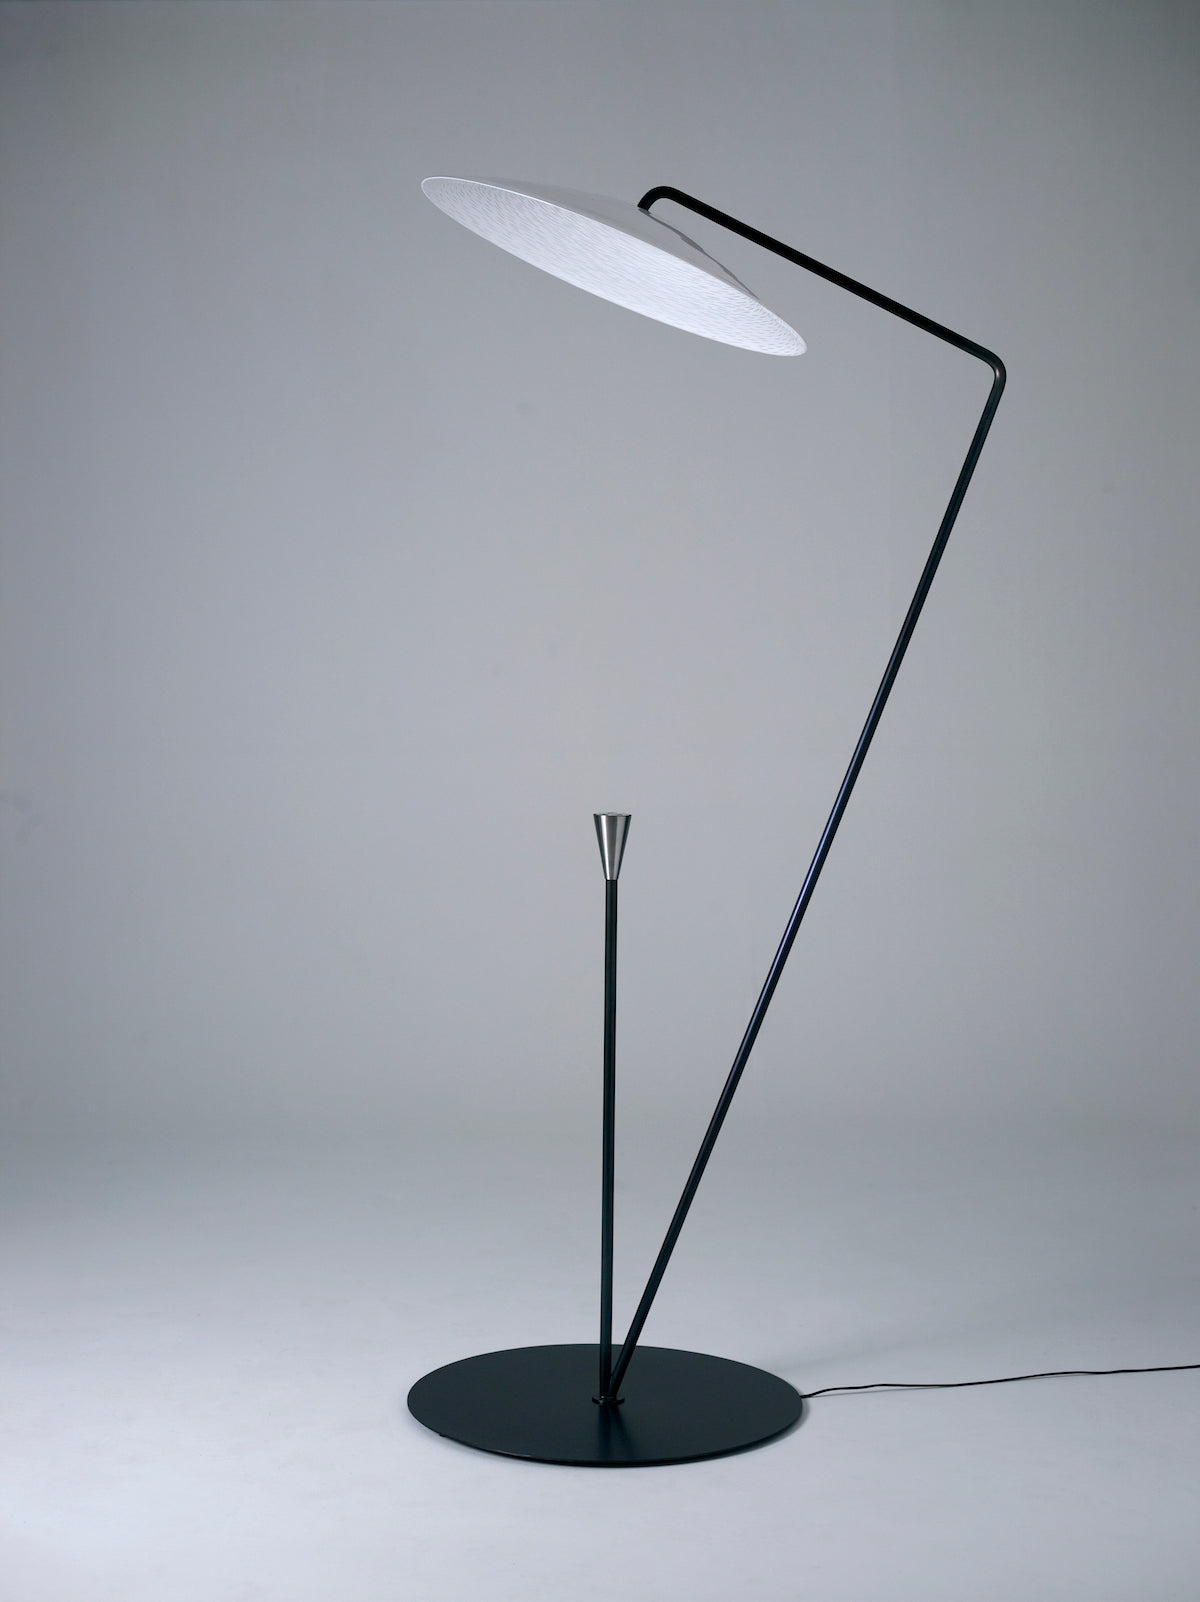 Lampe Nova par Atelier Stokowski